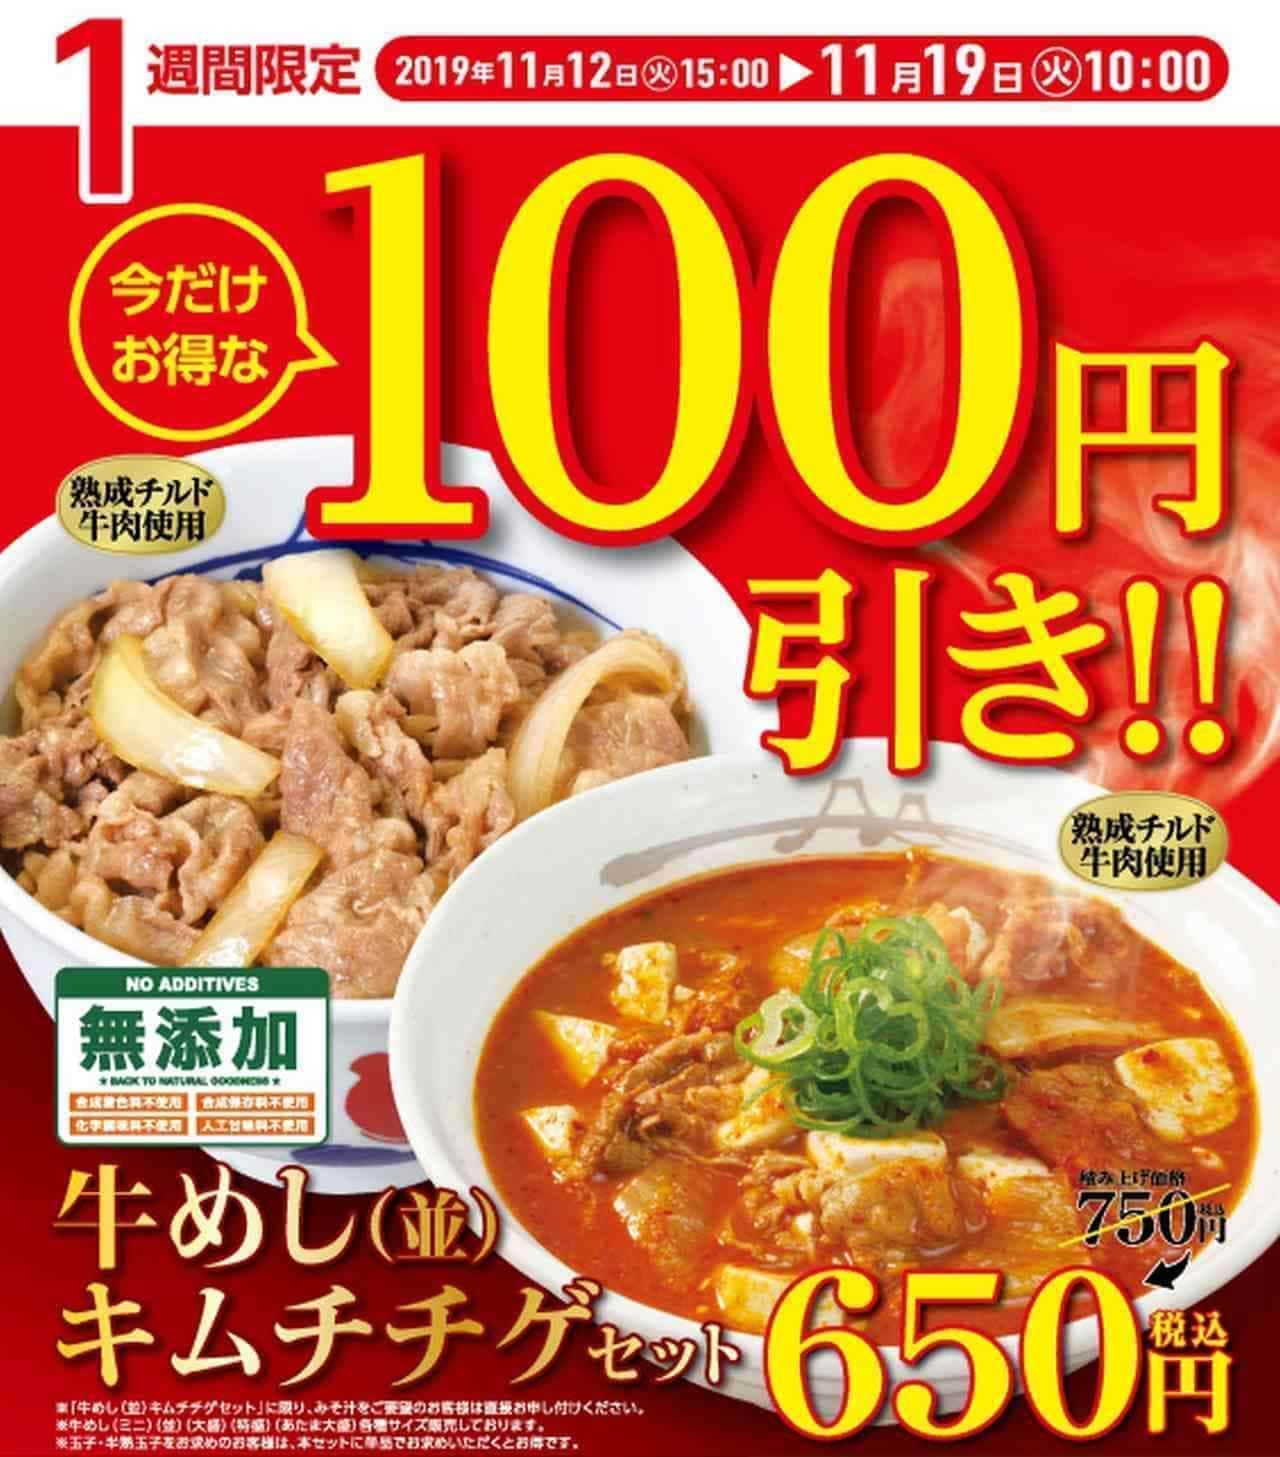 Matsuya "Beef rice kimchi jjigae set 100 yen discount" for 1 week only